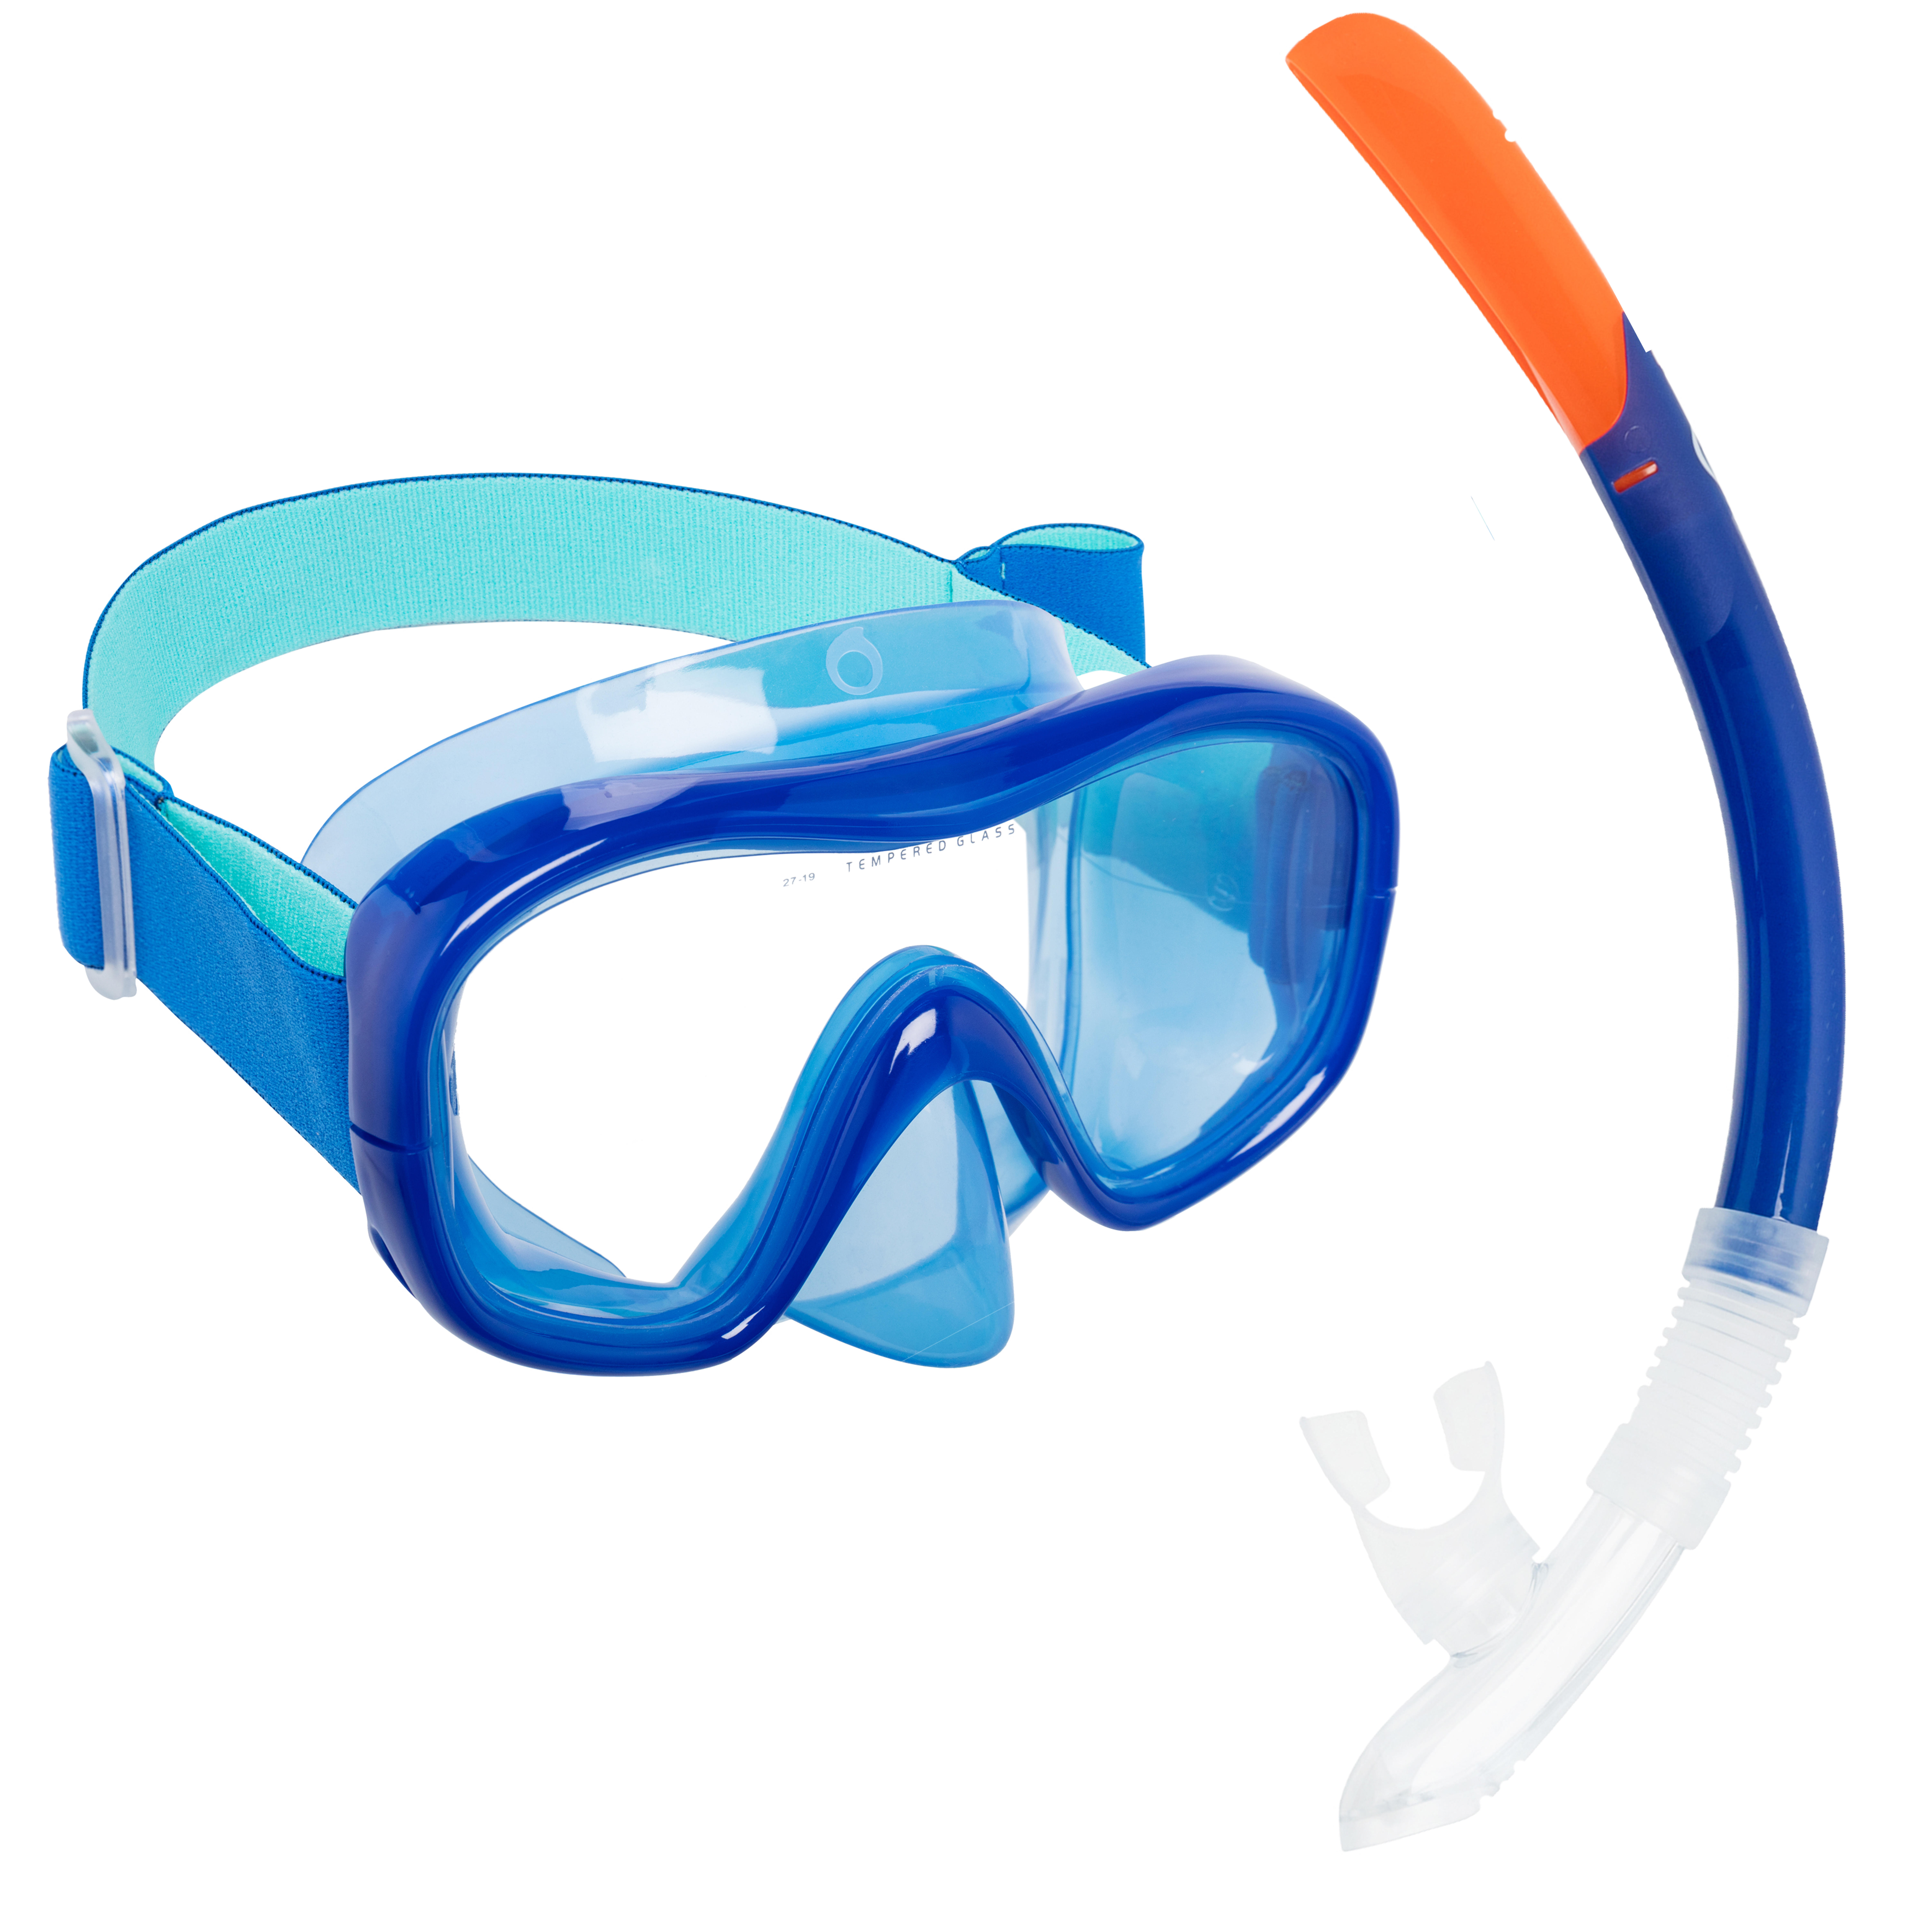 Kit Snorkeling Mască și Tub SNK 520 Albastru Adulți La Oferta Online decathlon imagine La Oferta Online